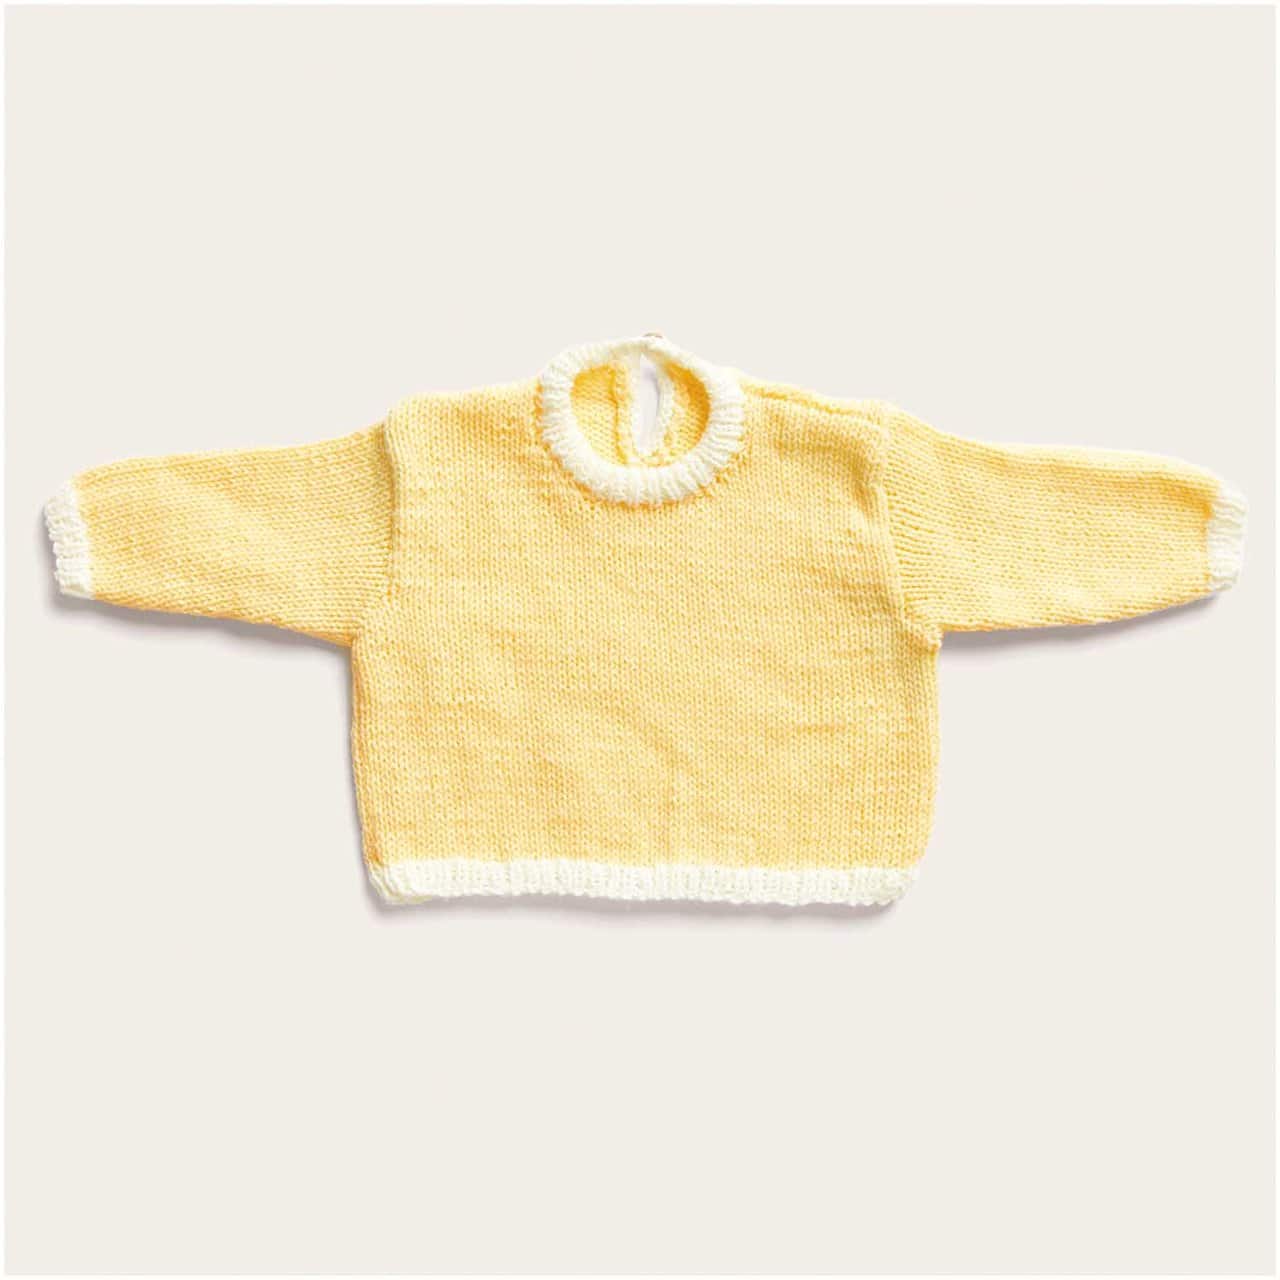 Strickset Pullover Modell 19 aus Baby Nr. 34 92/98 vanille